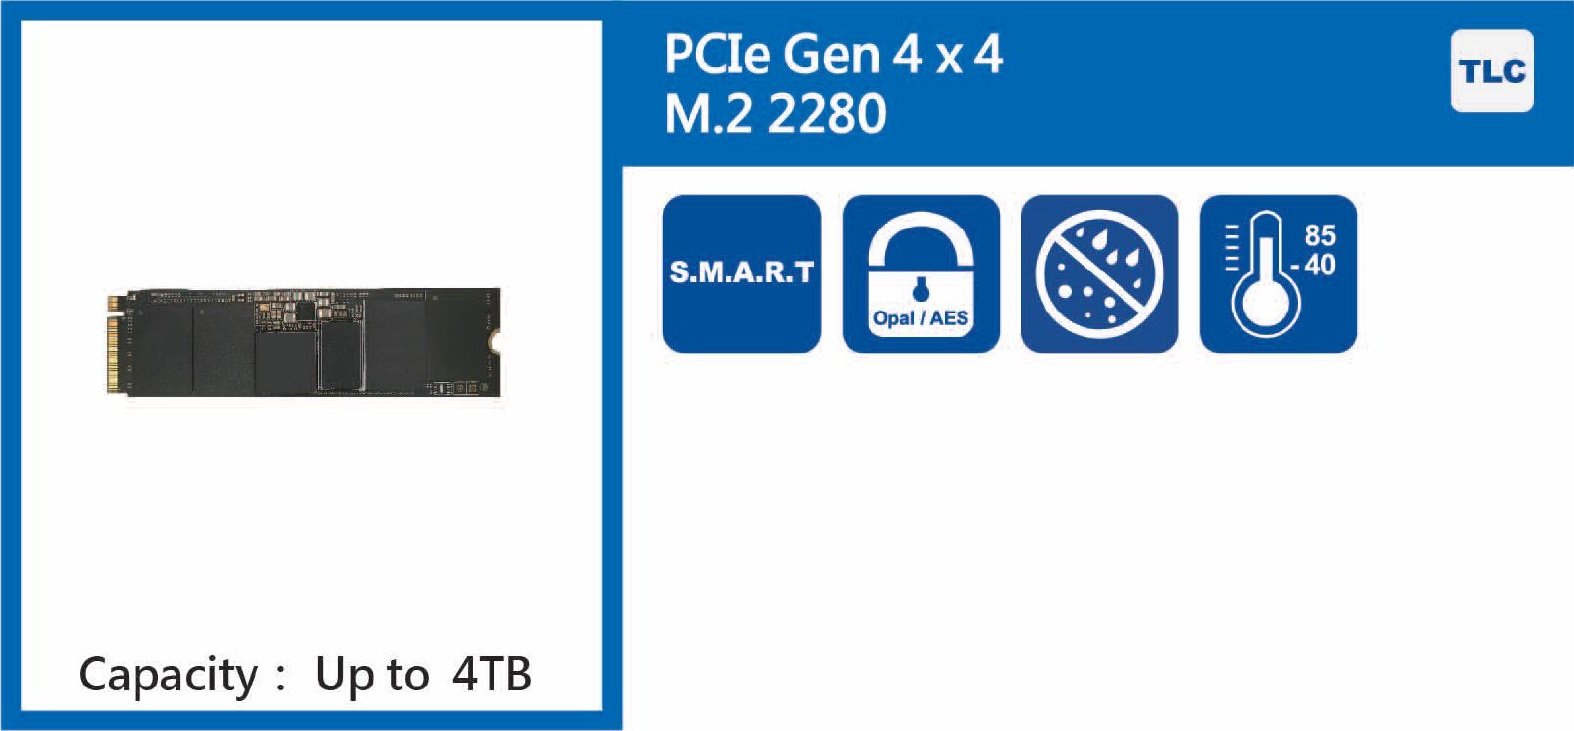 1_PCIe_Gen4x4_M.2